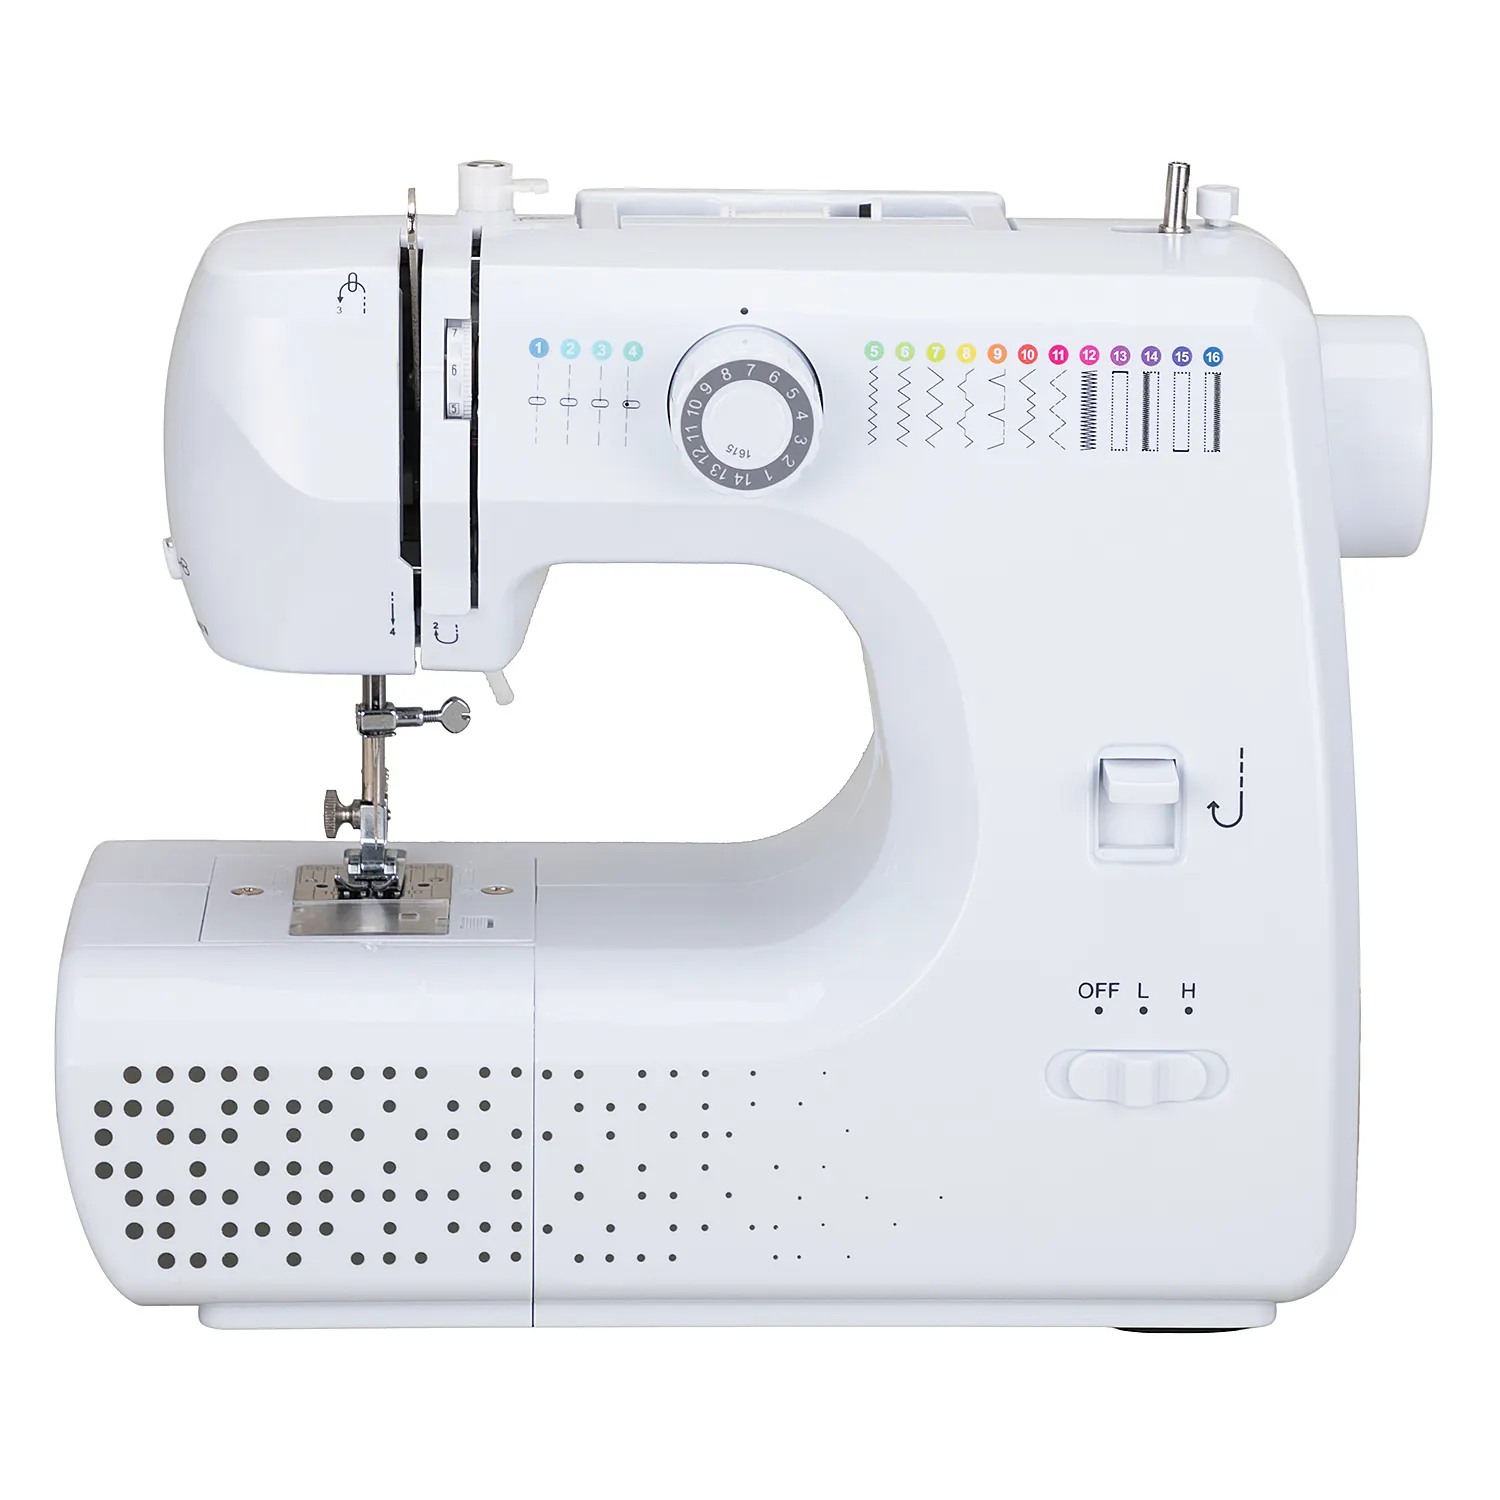 2022 new design multi-function chain stitch sewing machine merrow overlock sewing machine left handed sewing machine